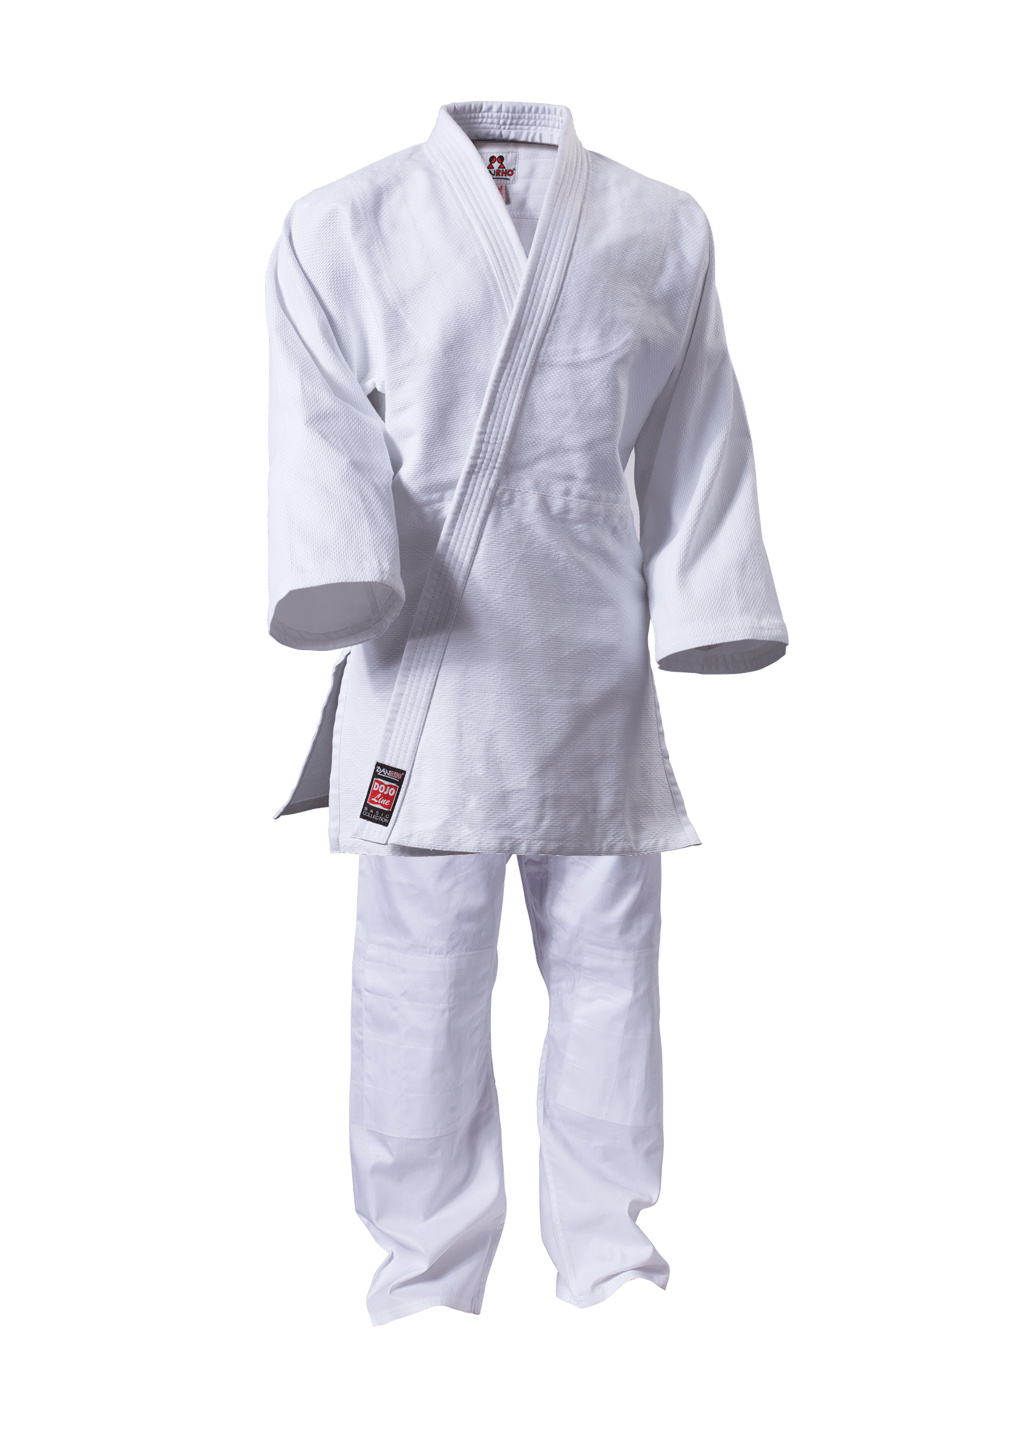 Judo, 100% Baumwolle DANRHO Judoanzug Classic weiß Größen 140-190cm 